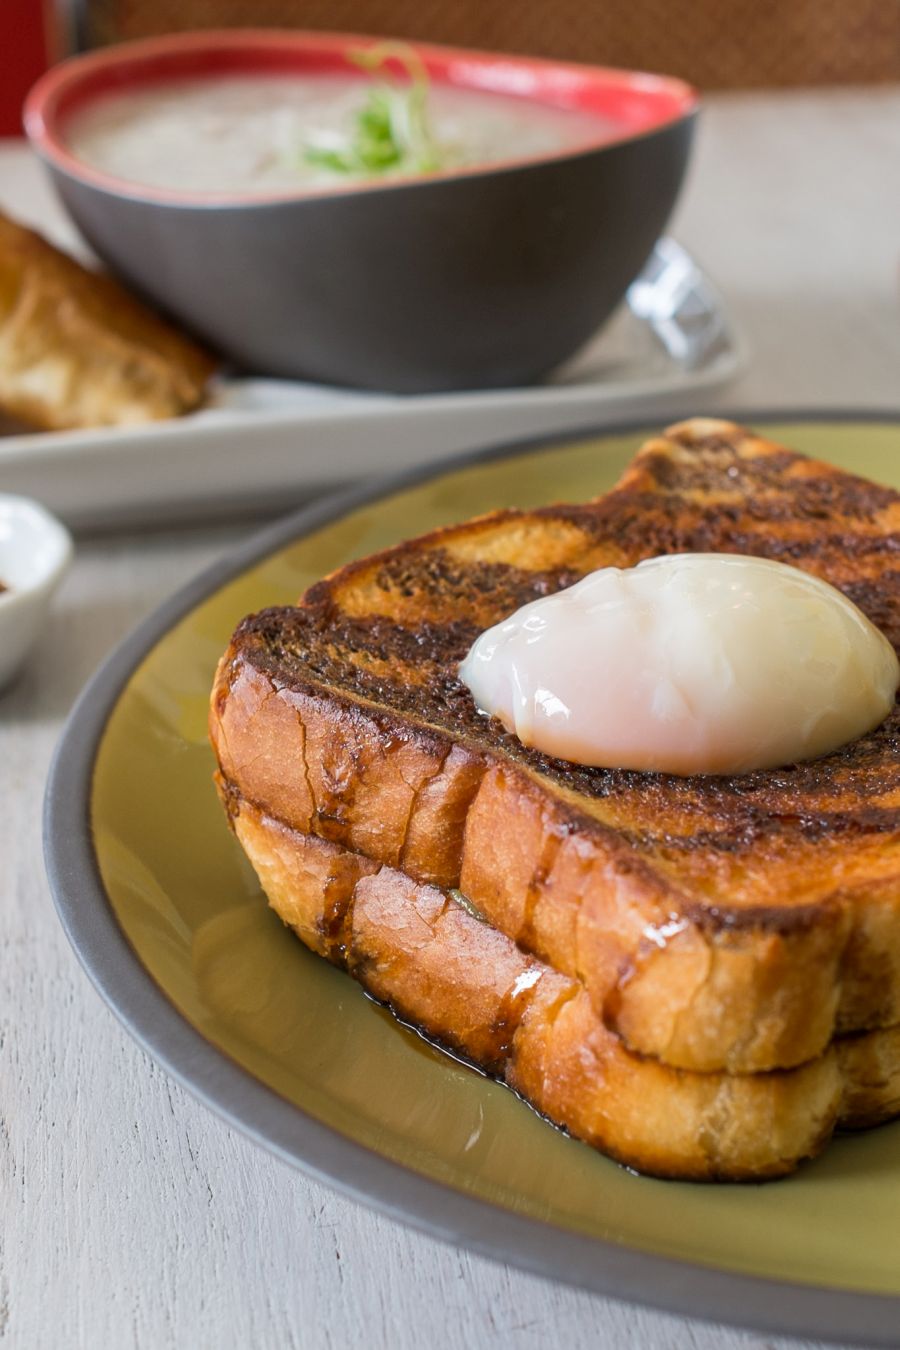 Kaya toast - Texas toast, pandan kaya, 62C egg, sweet soy (AU$12)